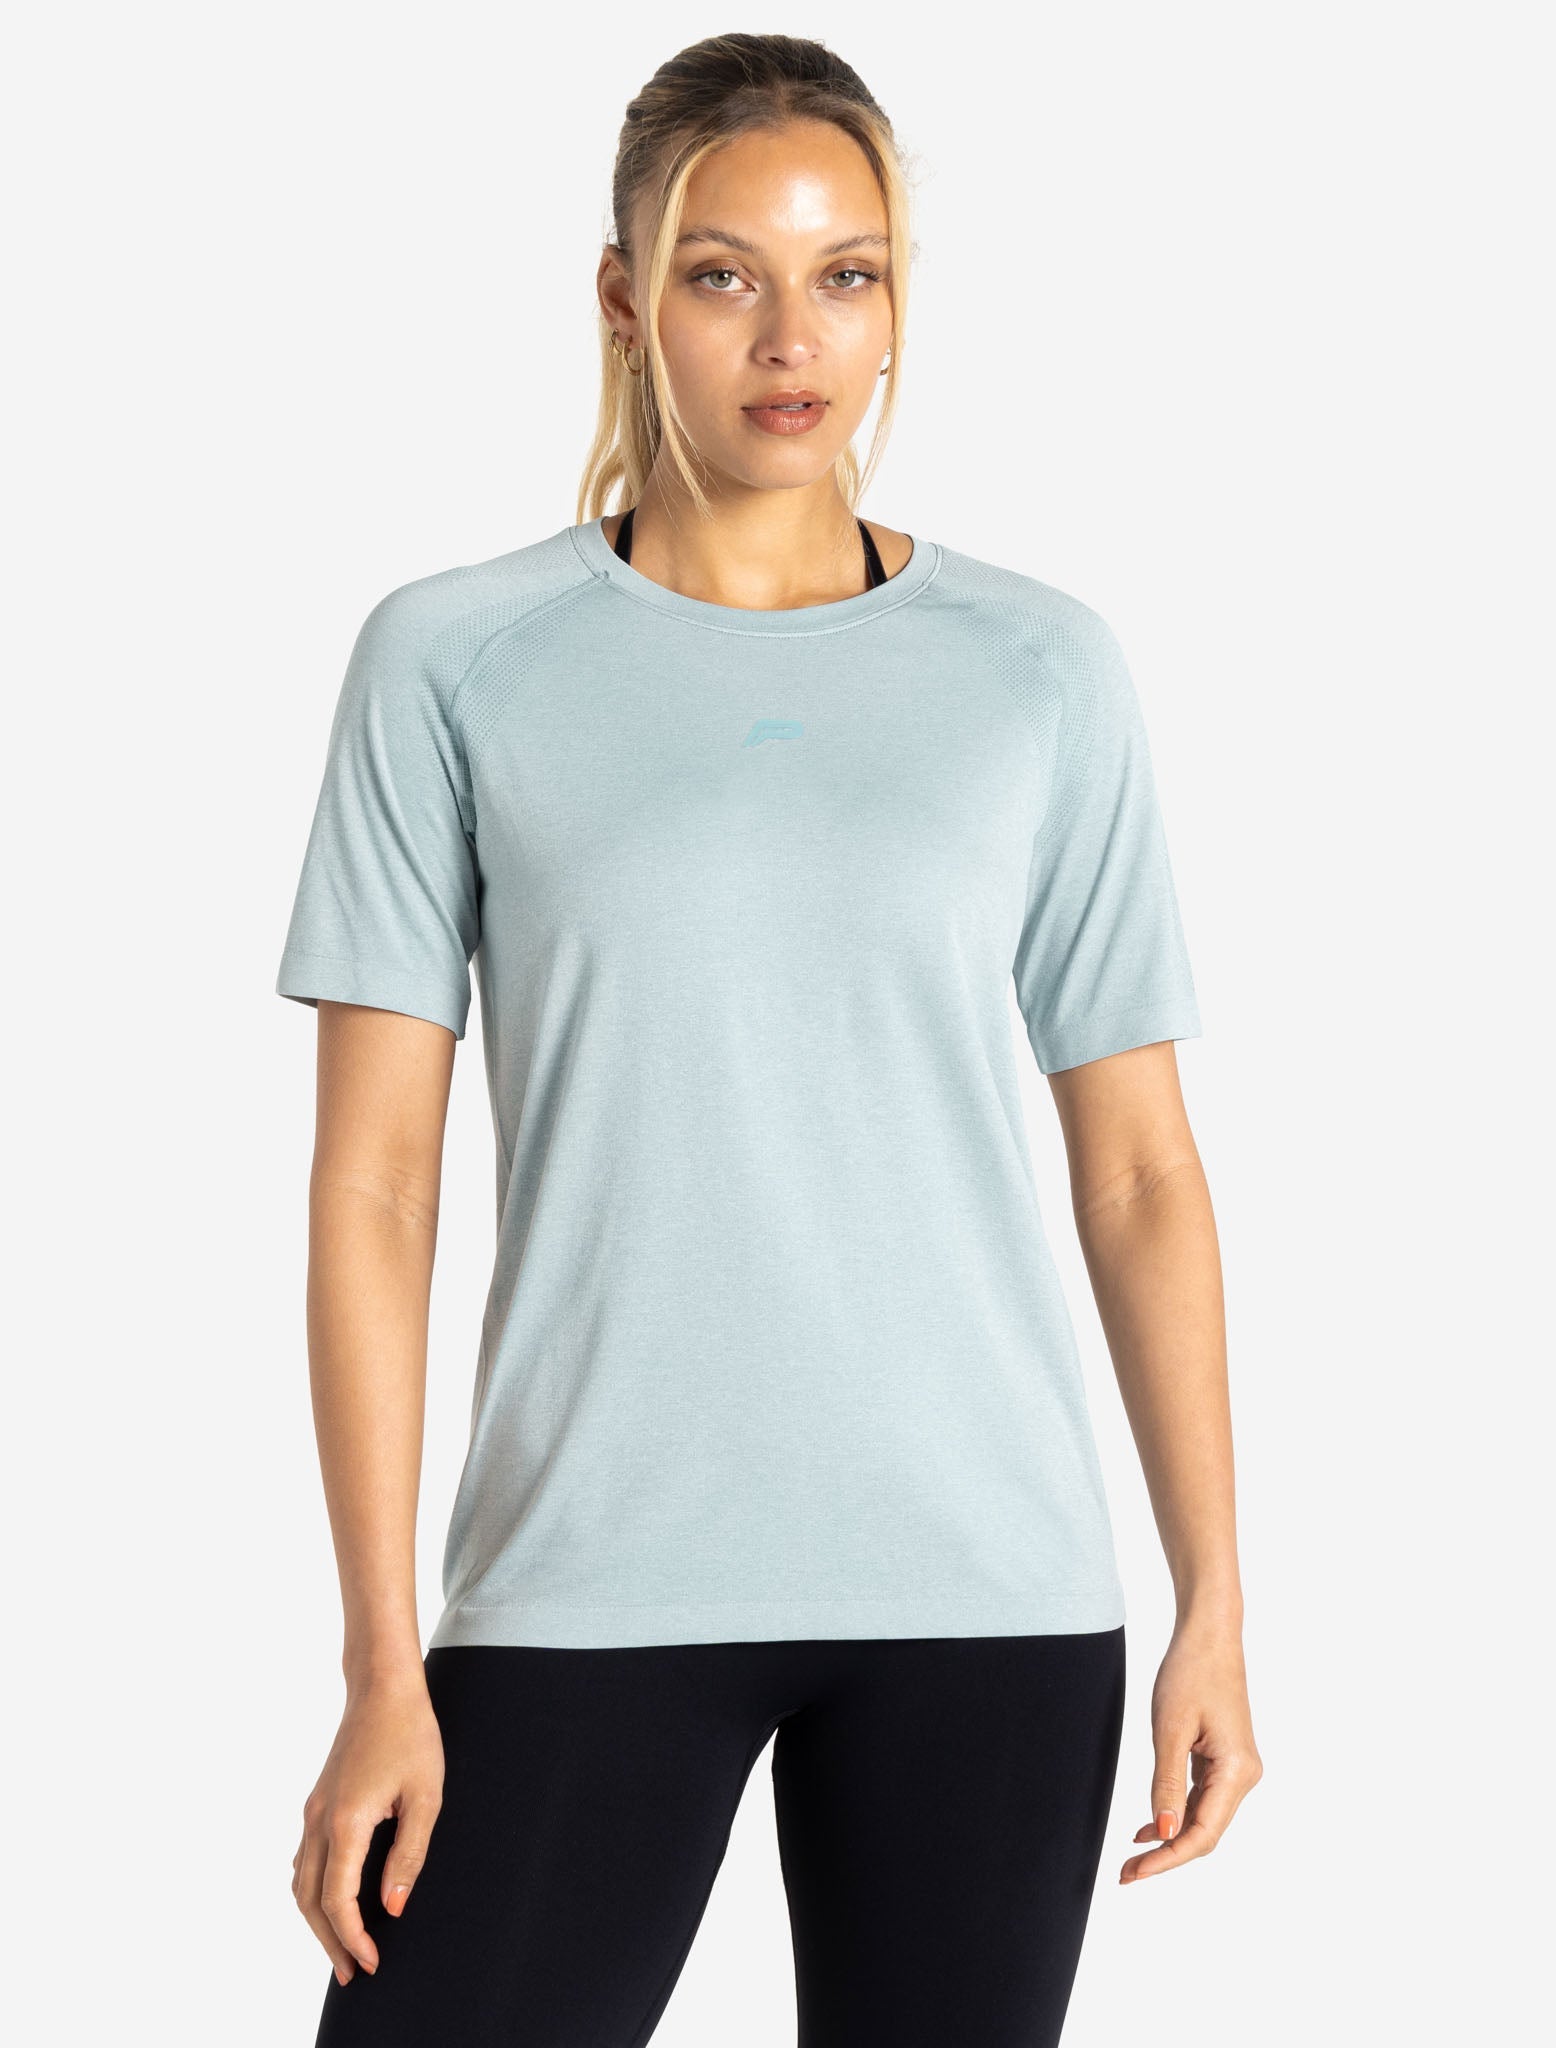 Seamless T-Shirt / Seafoam Green Marl Pursue Fitness 1